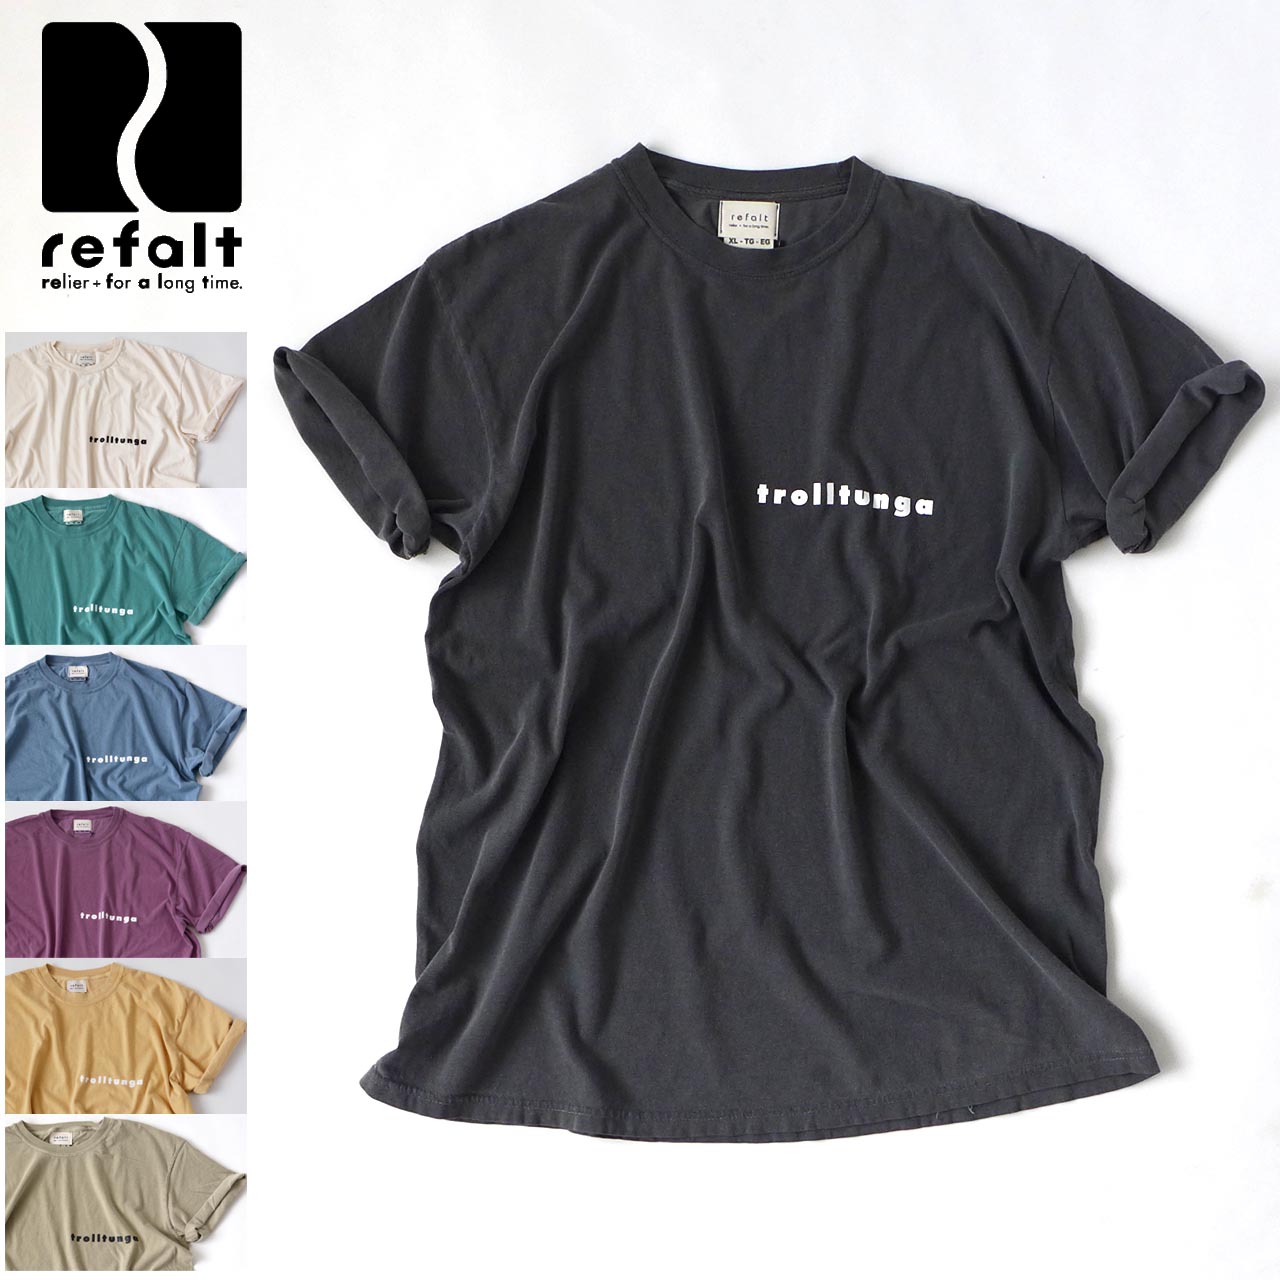 refalt original wear  ヴィンテージ風ビッグTシャツ「trolltunga tee」  オリジナルTシャツ・トロルトゥンガ ・メンズ・レディース・半袖t・アウトドア・ビンテージライク・古着風・後染・ピグメント・MEN'S/ LADY'S 